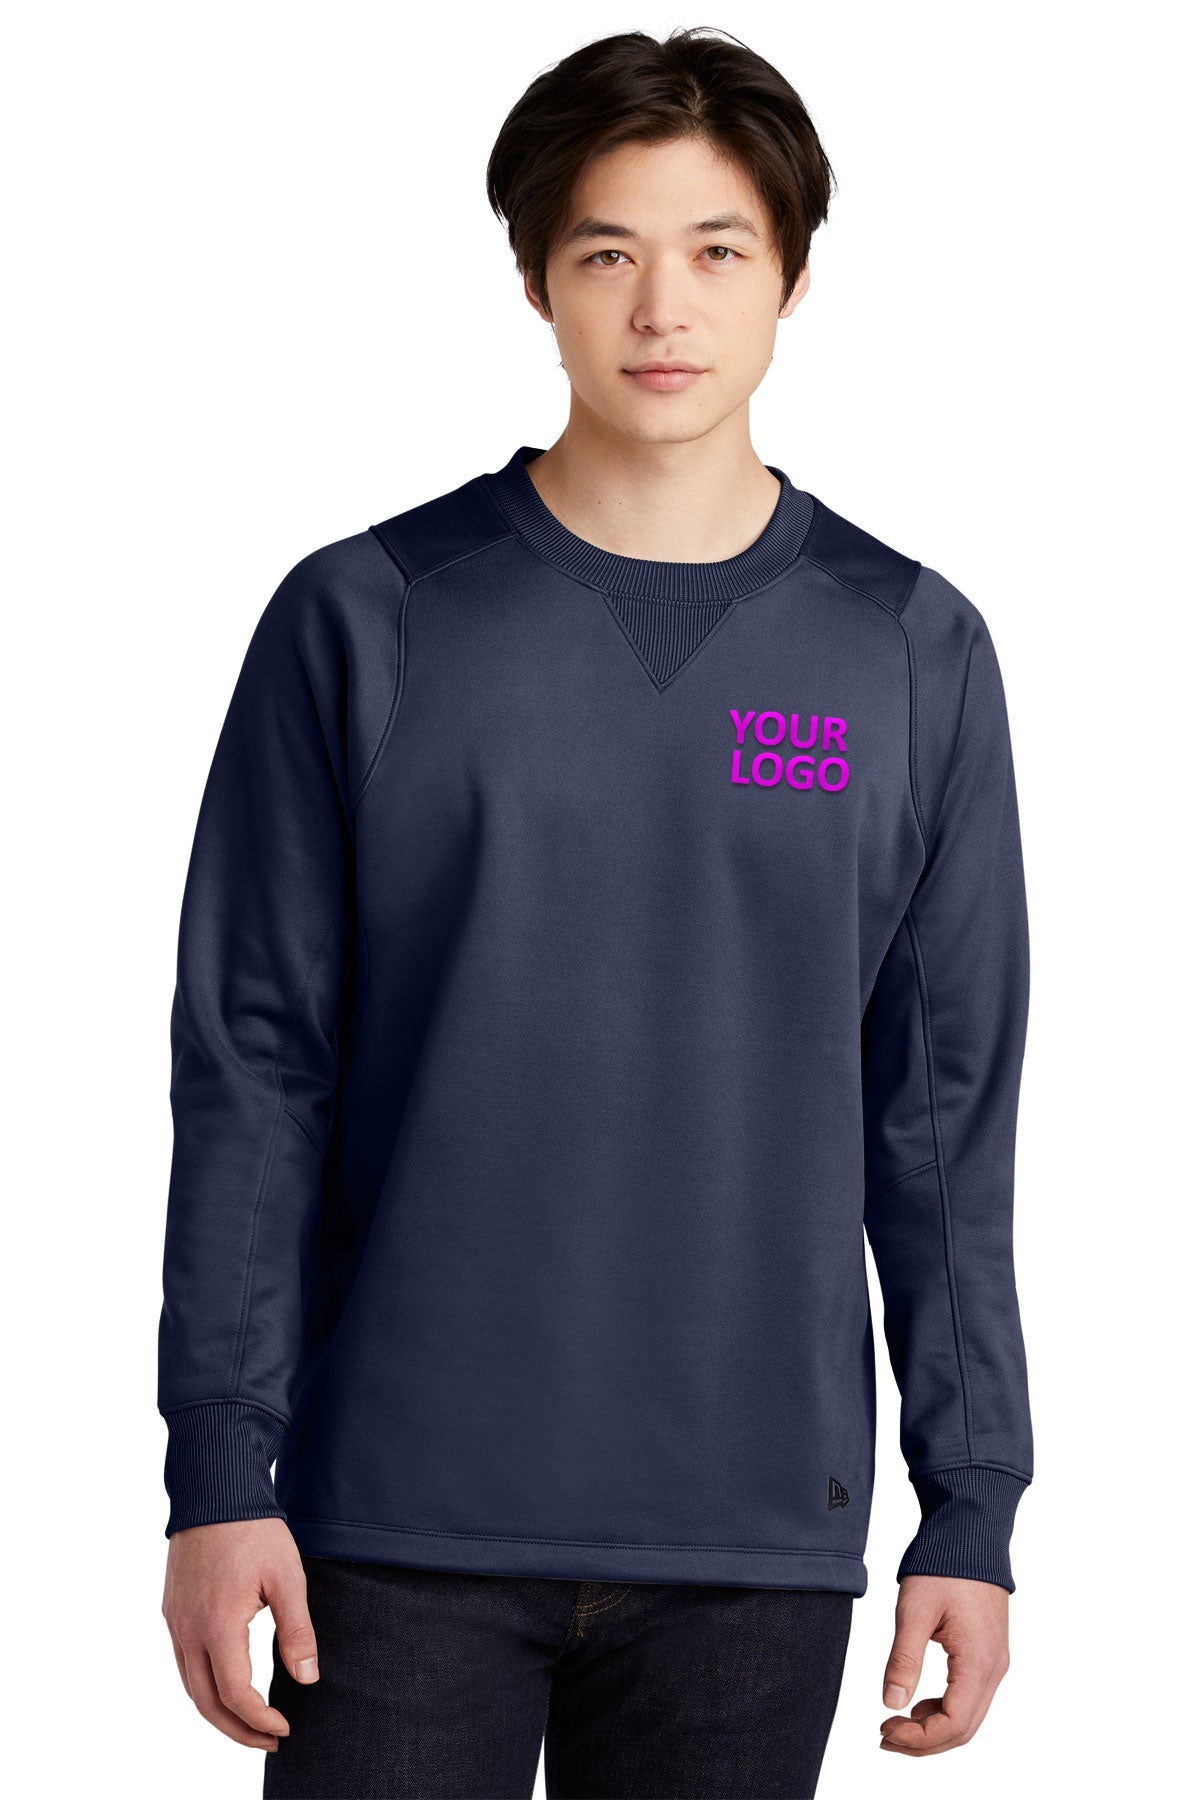 New Era Venue Fleece Branded Sweatshirts, True Navy